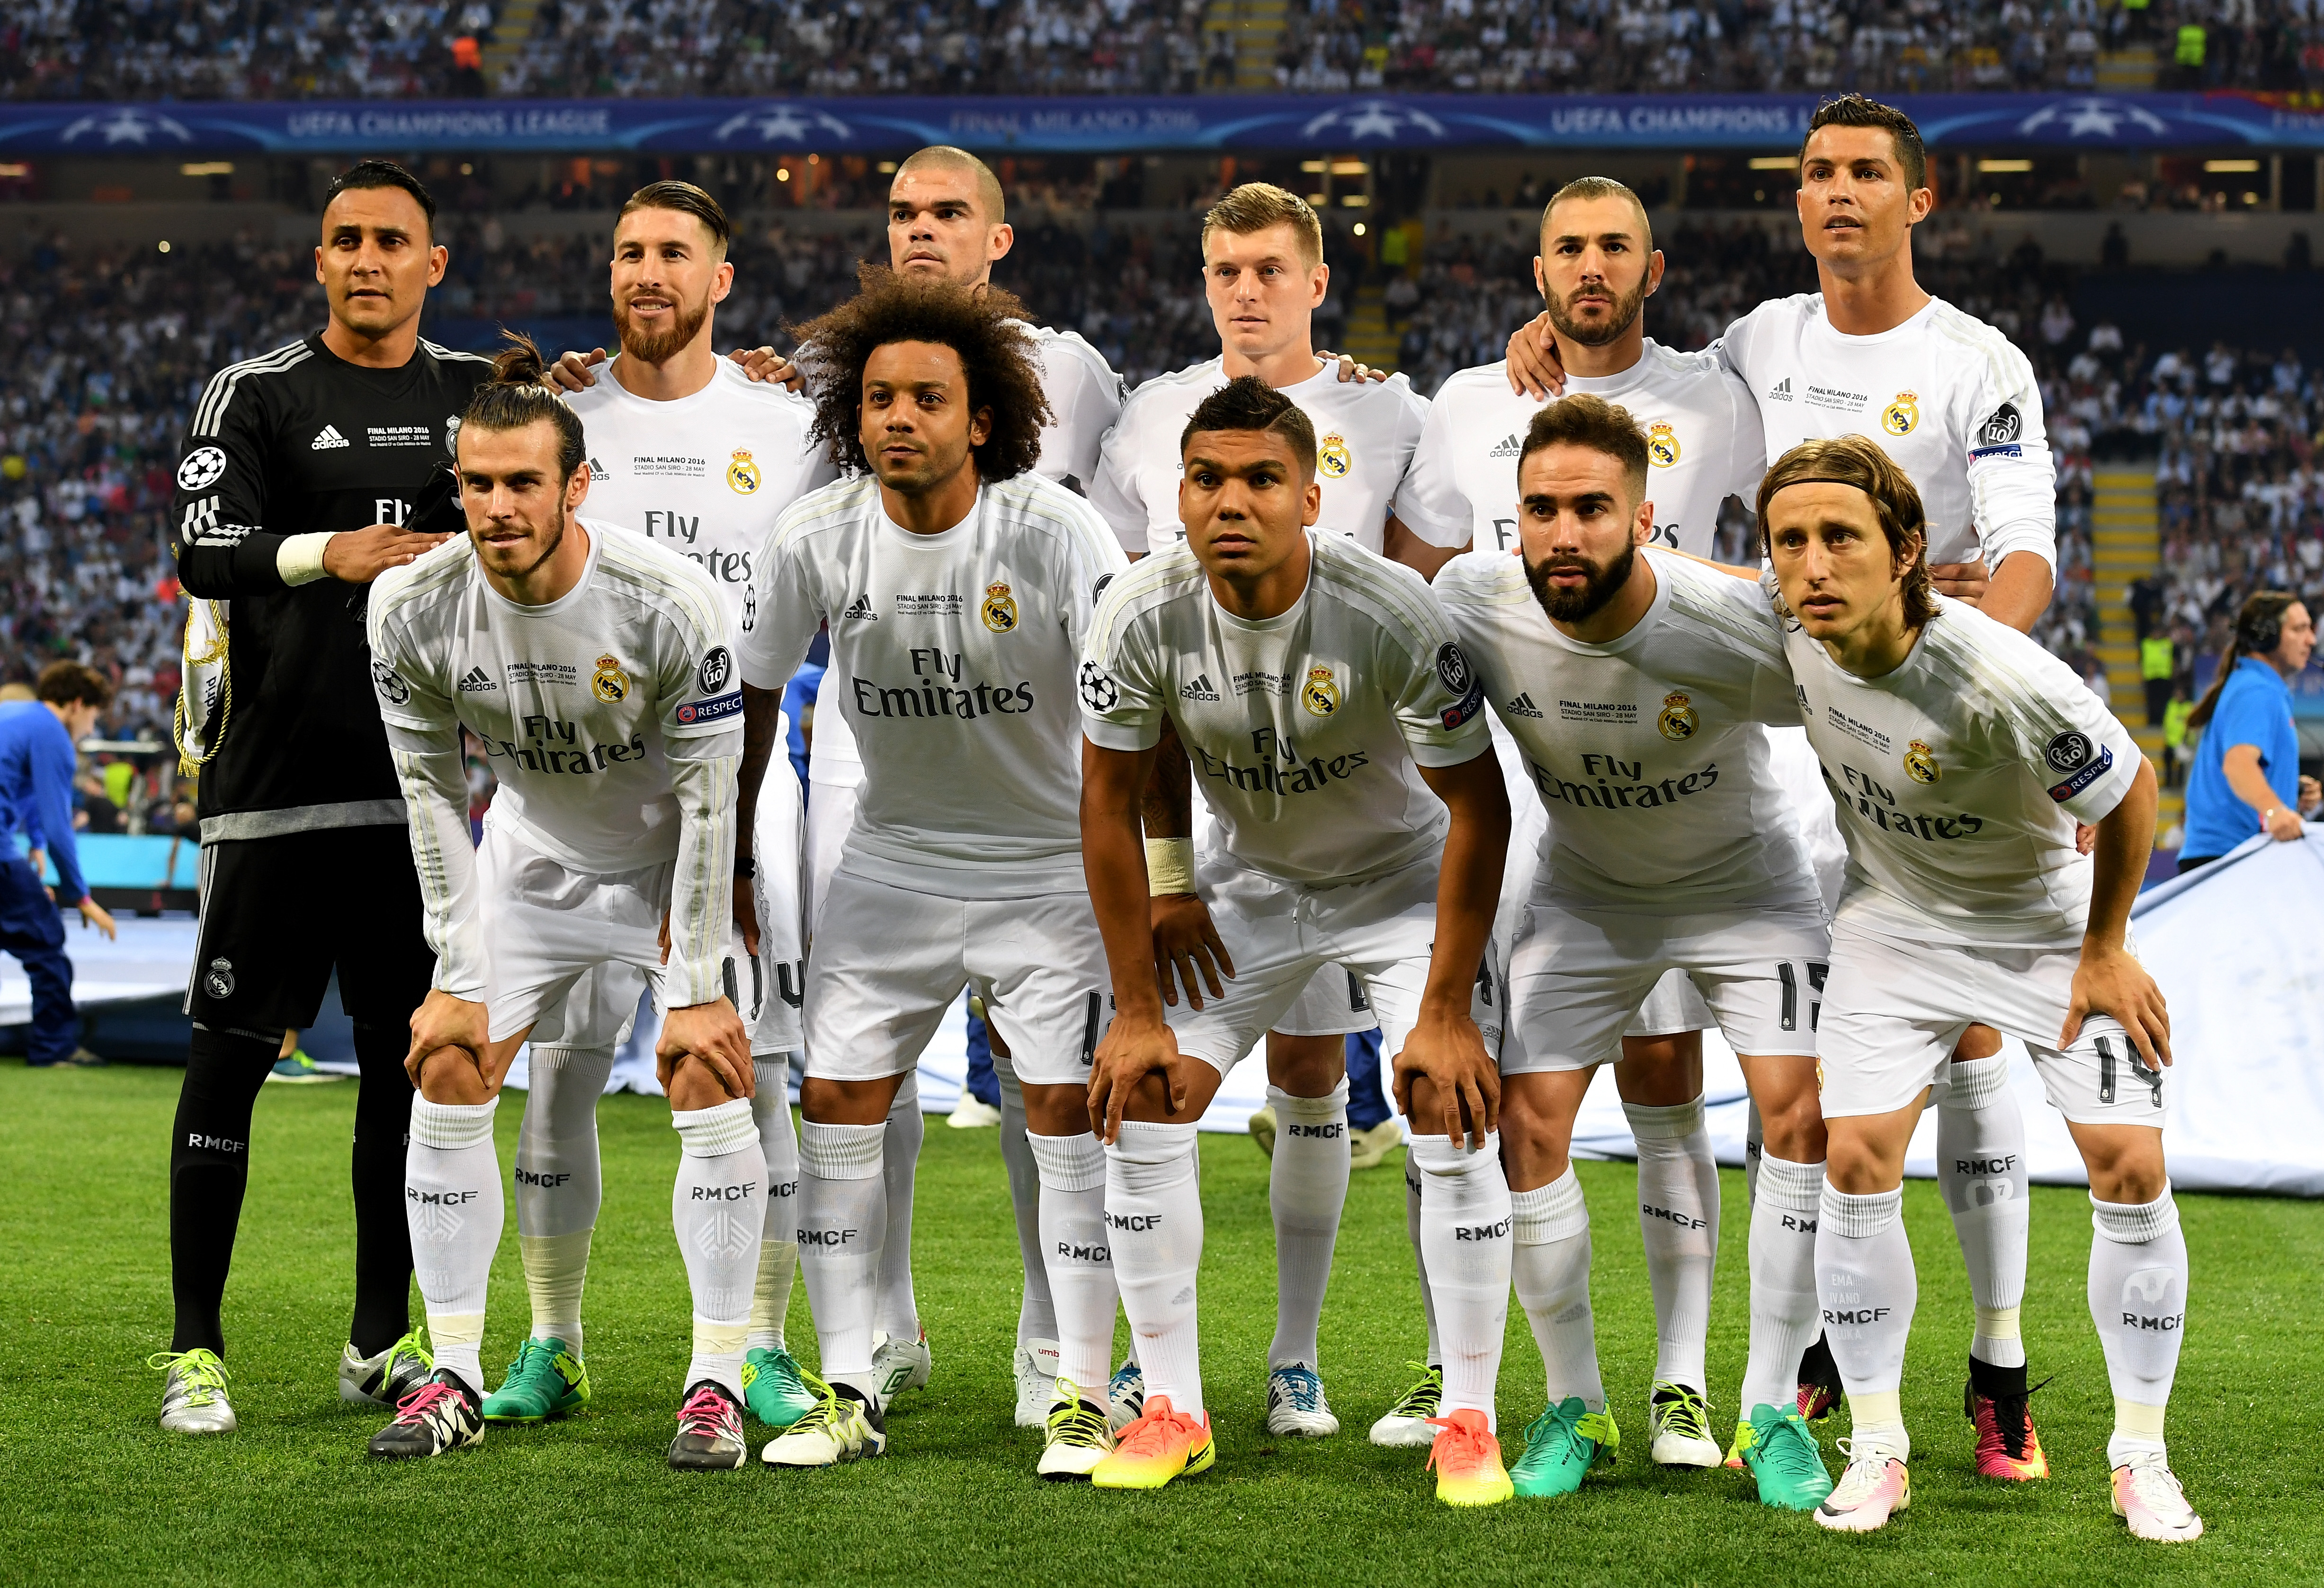 2015 2016 года. Команда Реал Мадрид 2016. Команда Реал Мадрид 2015. Фото команды Реал Мадрид 2016. Состав Реал Мадрида 2016 года.